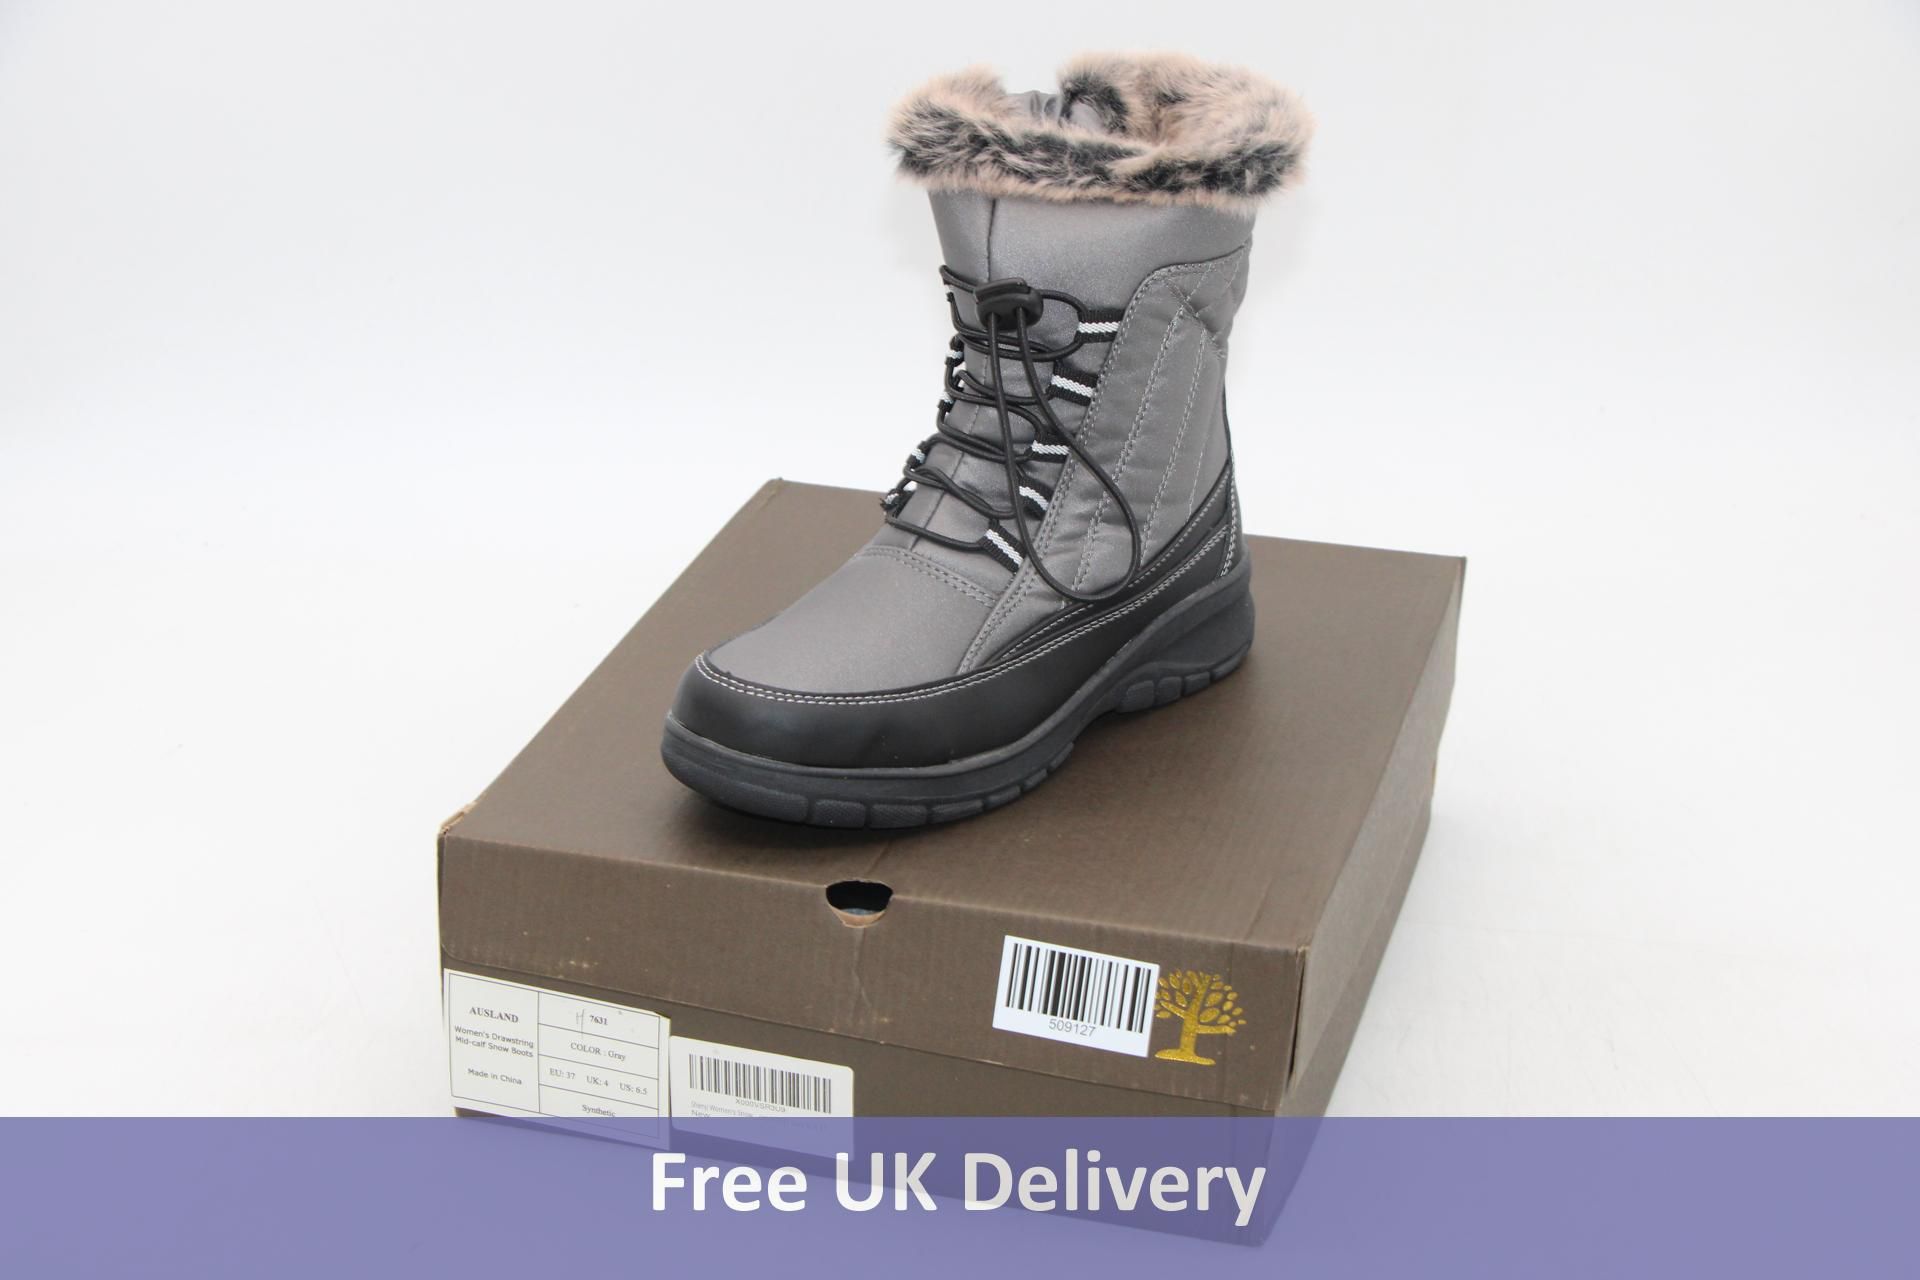 Ausland Woman's Drawstring Midcalf Snow Boots, Grey, UK 4